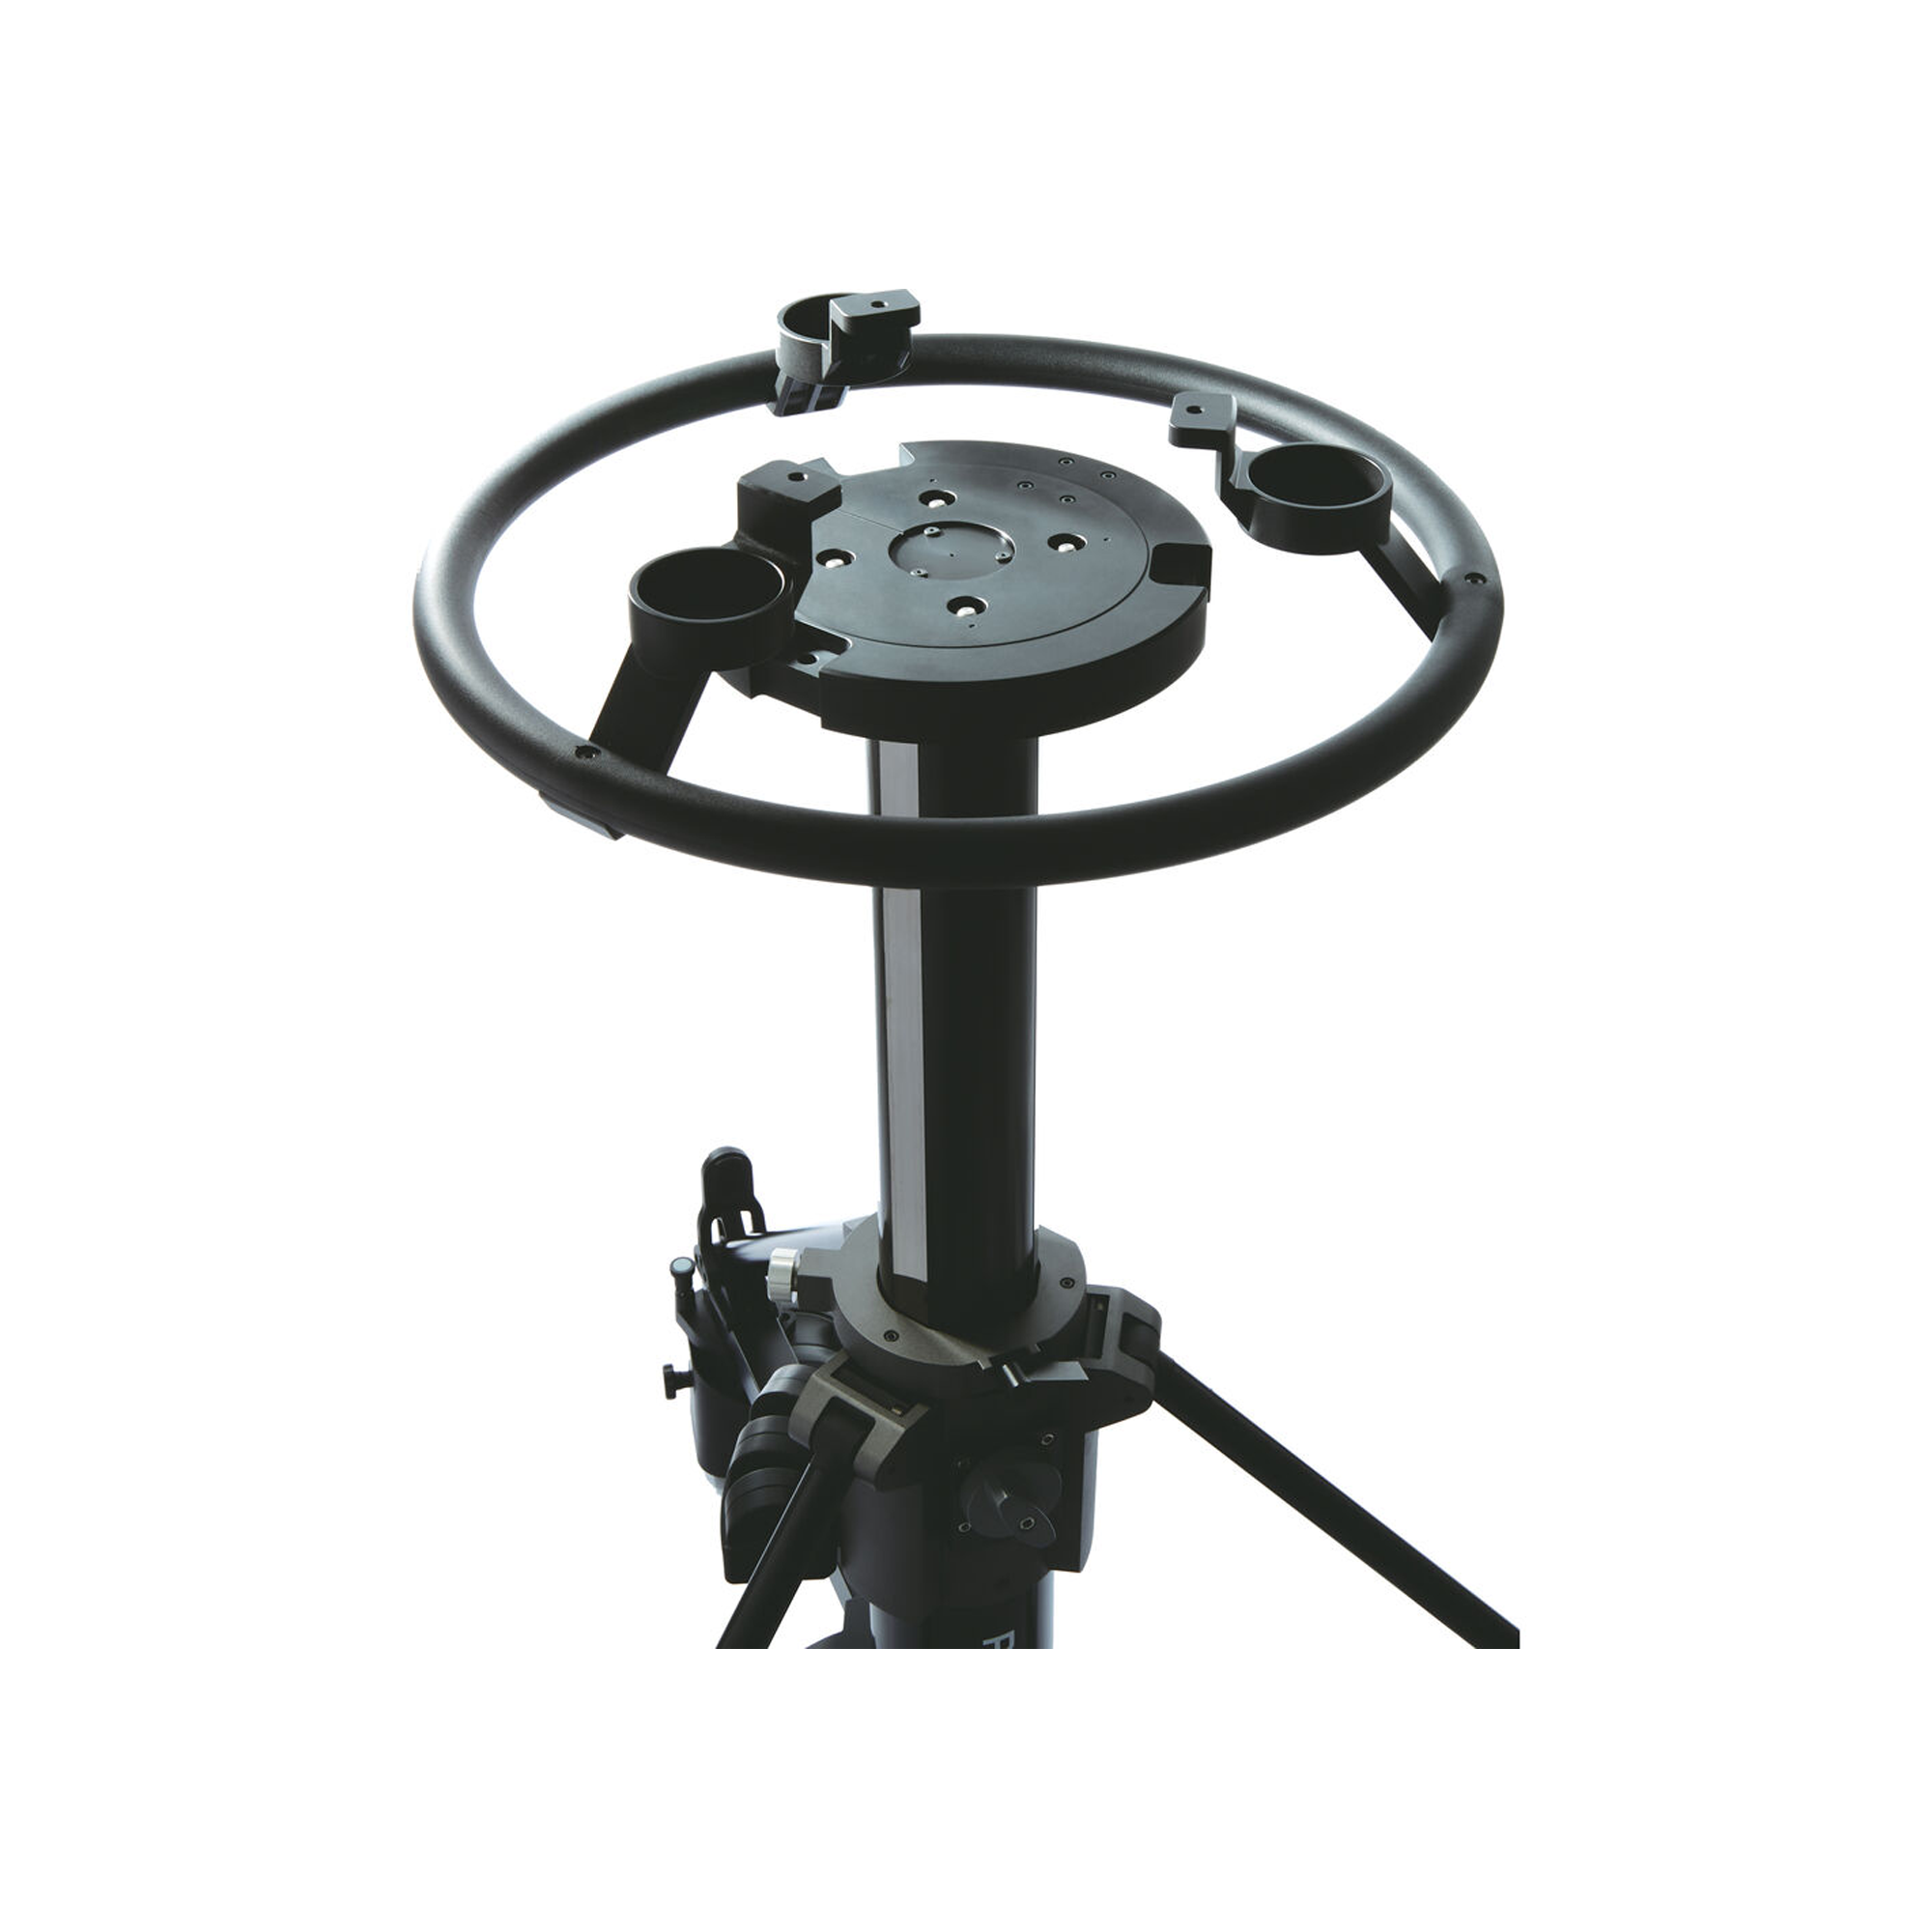 Libec 150mm flat base pedestal system for outside broadcast and studio use, payload 60kg